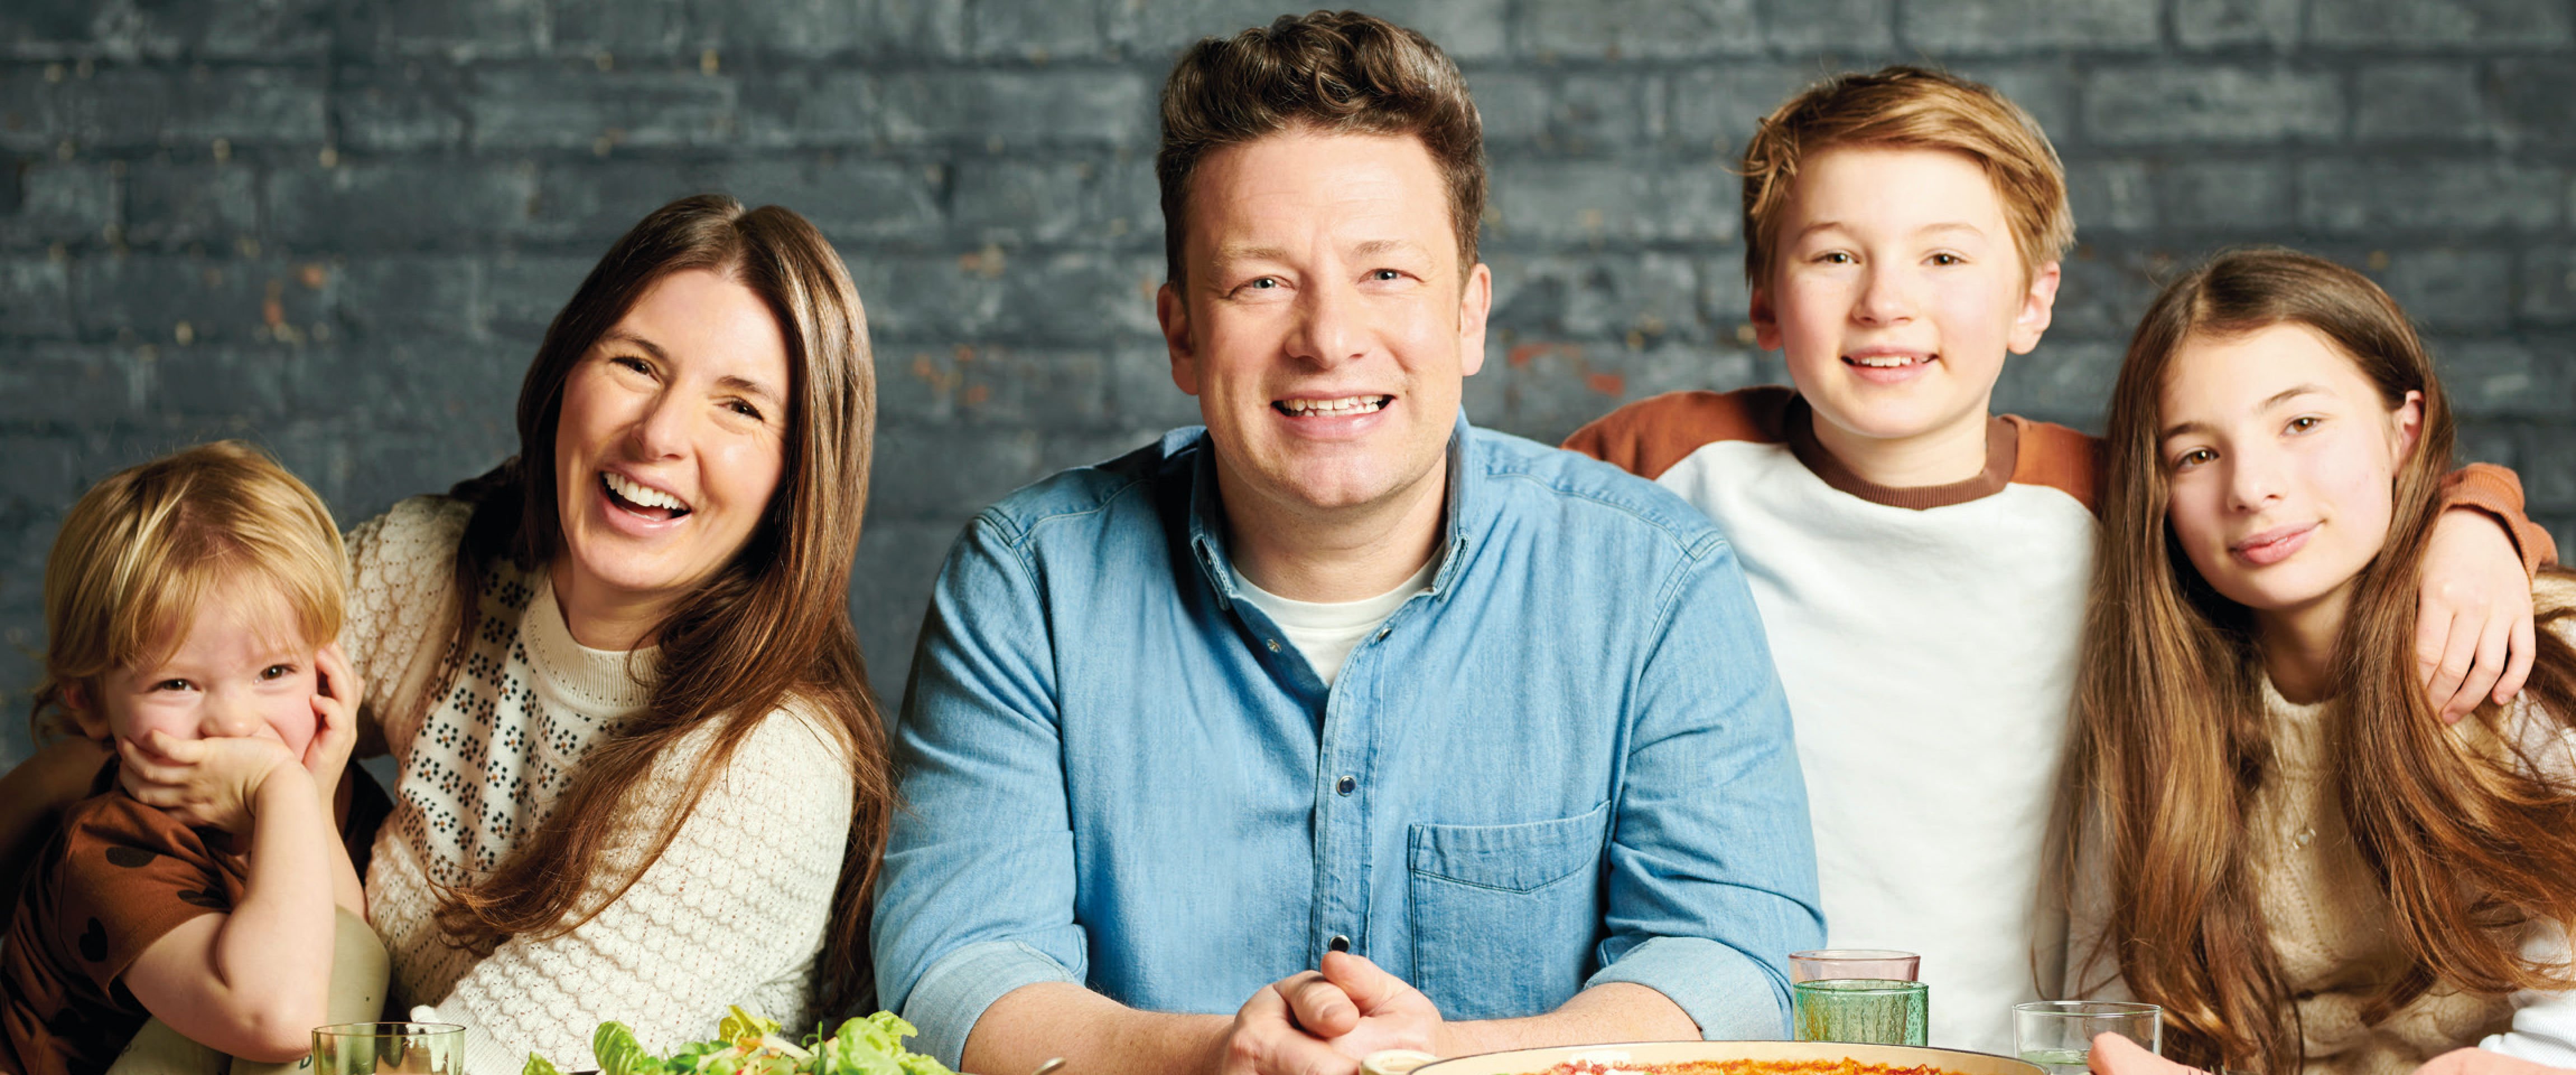 Jamie Oliver Group Jamie Oliver announces new book: Together 